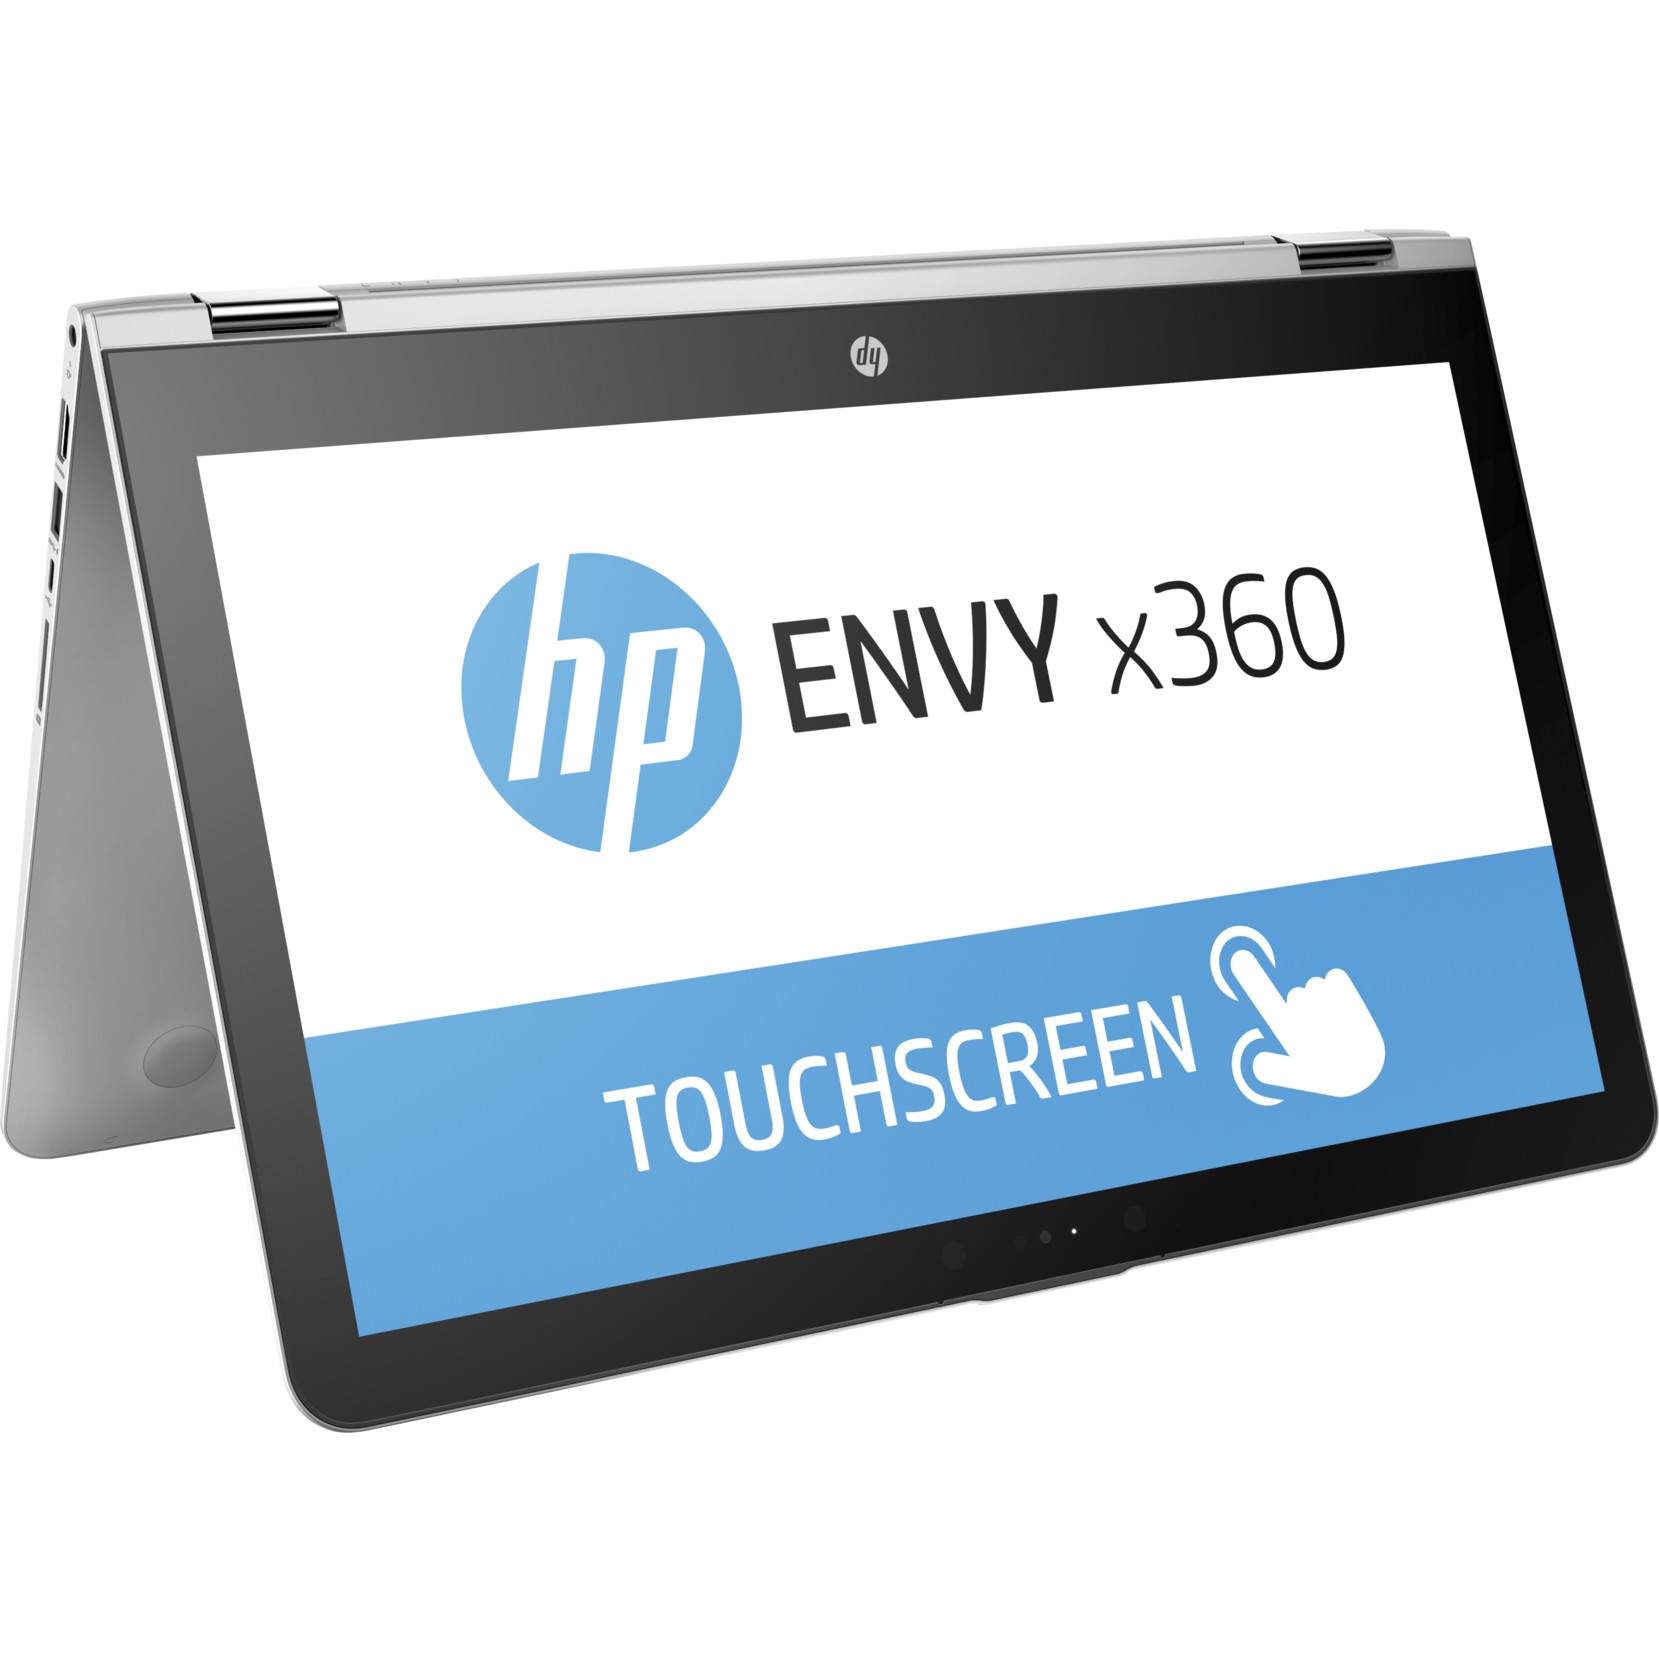  Laptop 2 in 1 HP Envy x360 W8Z69EA, Intel Core i7-6500U, 8GB DDR4, HDD 1TB, Intel HD Graphics, Windows 10 Home 